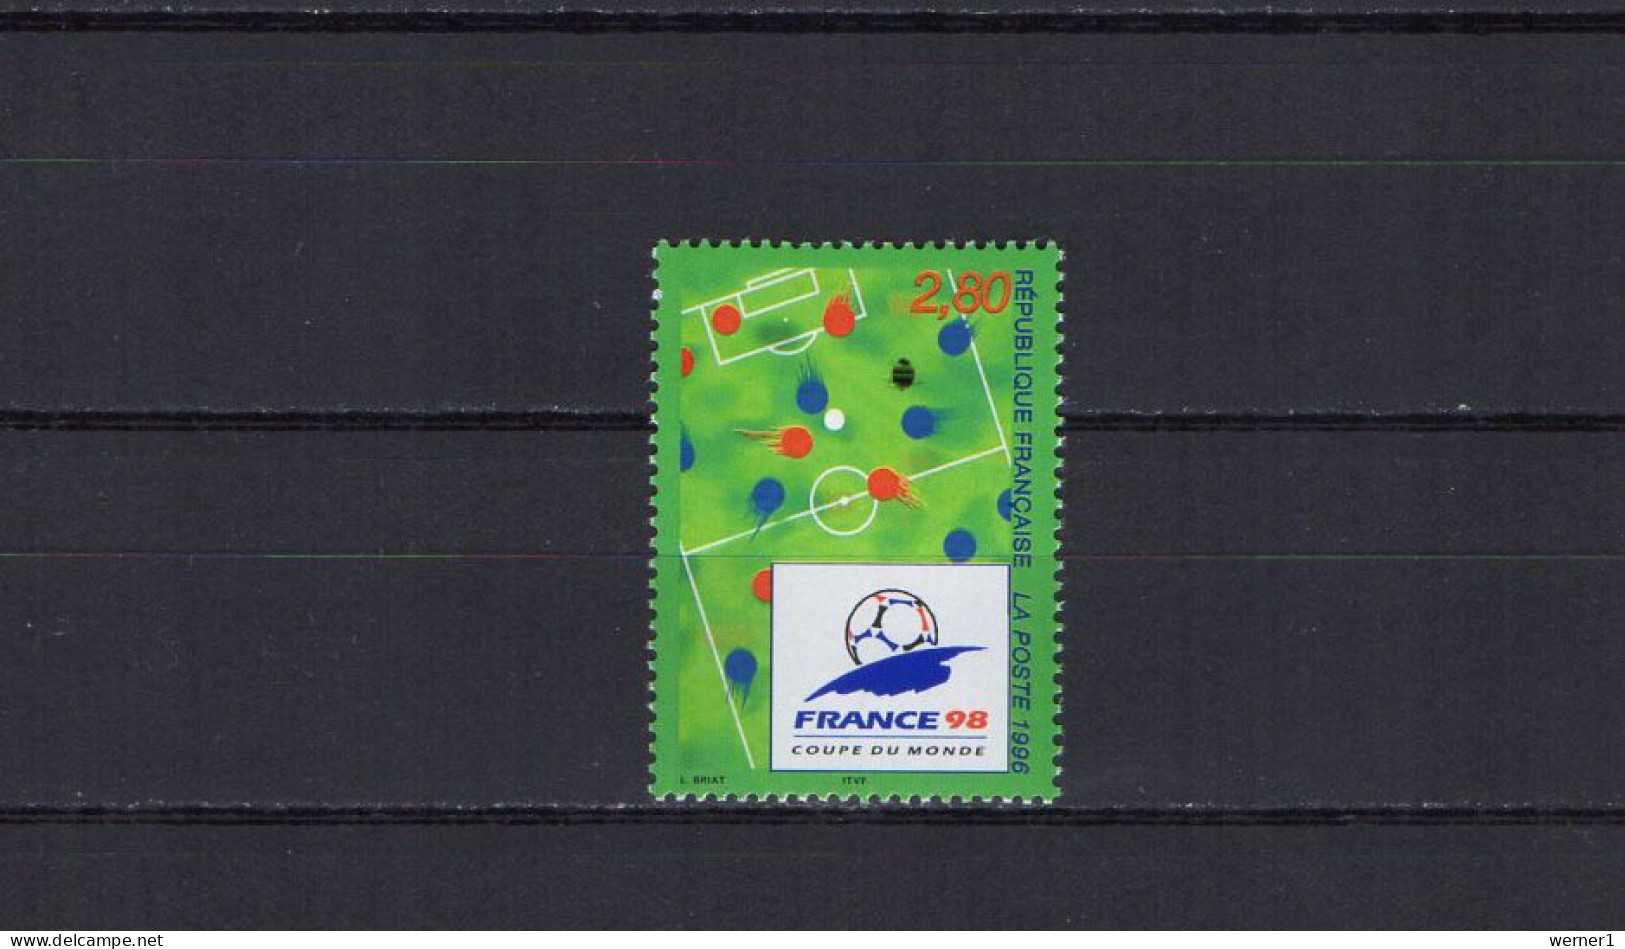 France 1995 Football Soccer World Cup Stamp MNH - 1998 – France